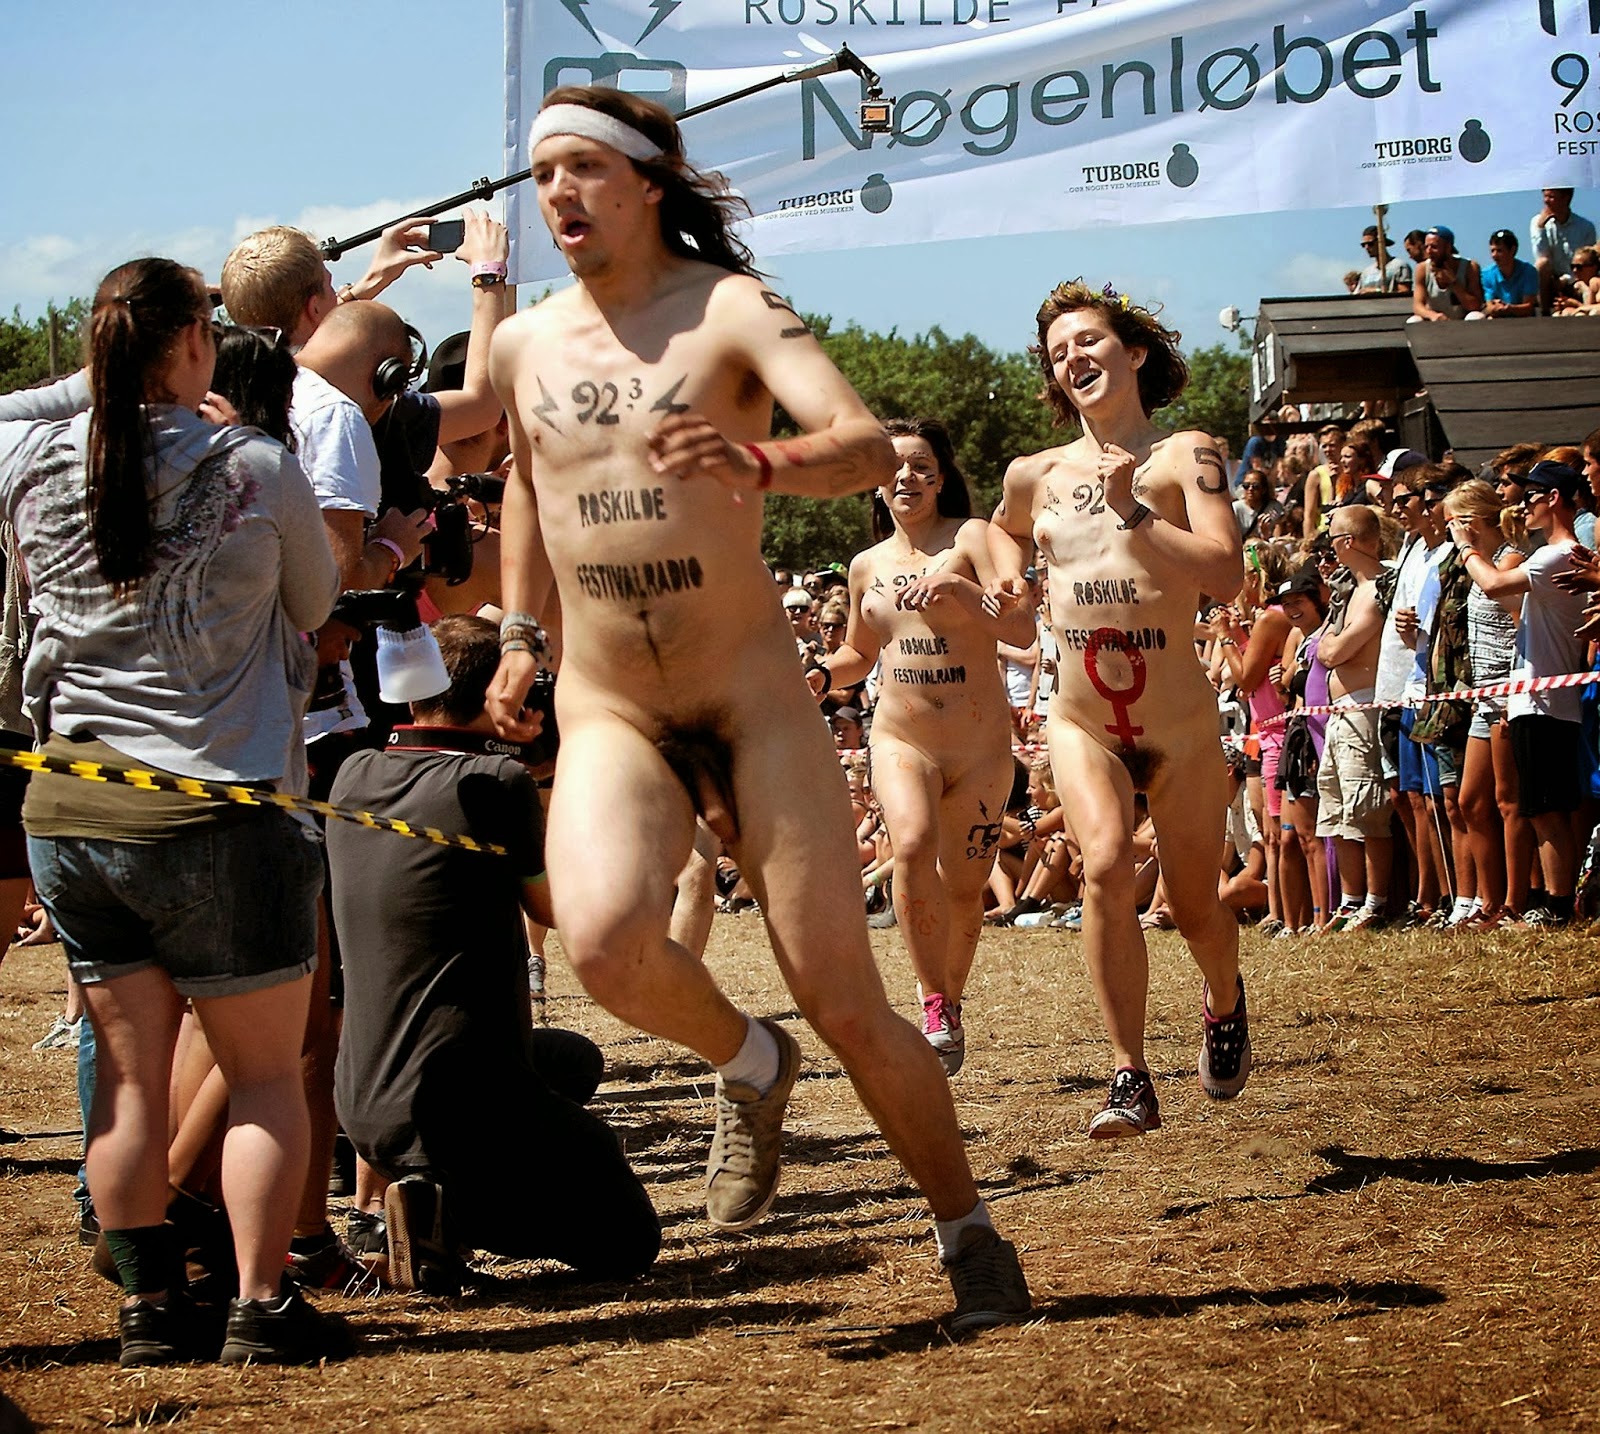 https://www.nudismlife.com/galleries/public_nudity/roskilde_naked_race/2013_roskilde_naked_run/2013_roskilde_naked_runners_017.jpg